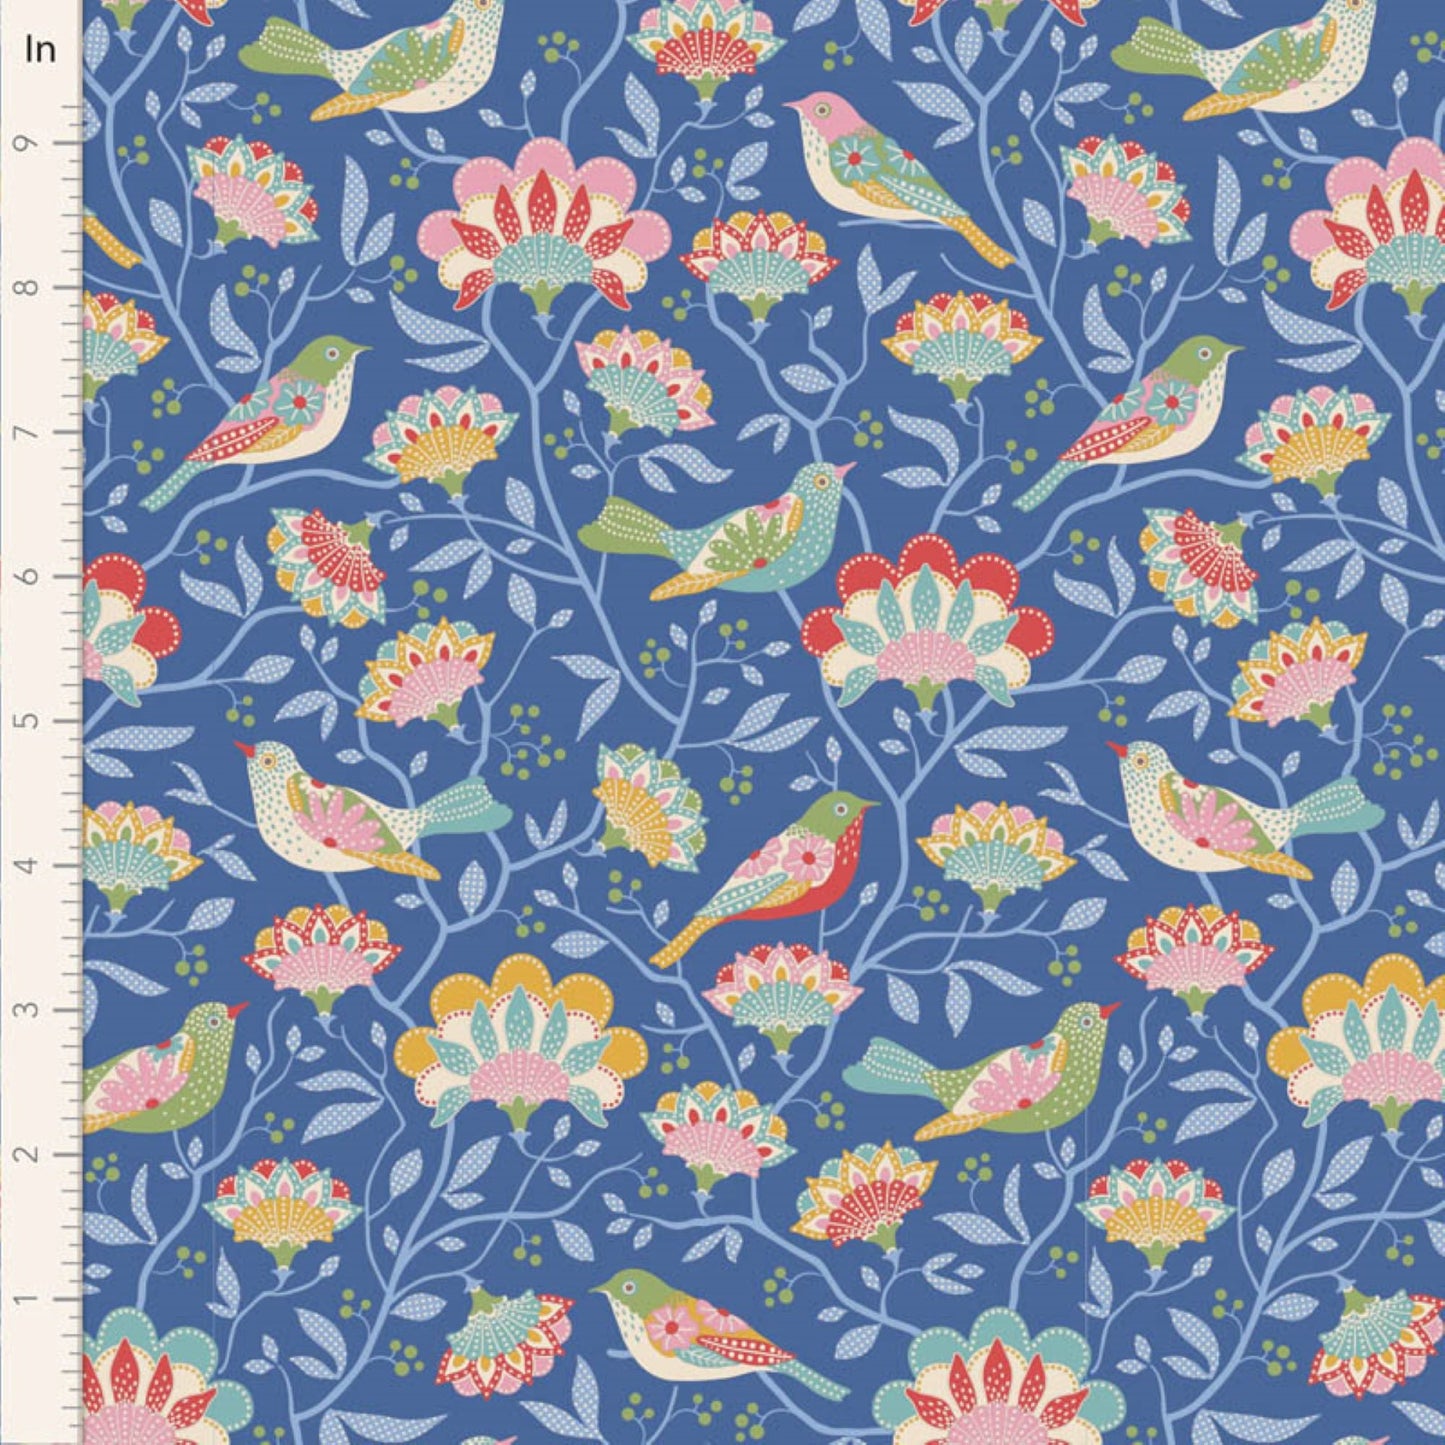 Tilda Jubilee and Farm Flowers floral blue bundle 7 Fat Eighths cotton quilt fabric